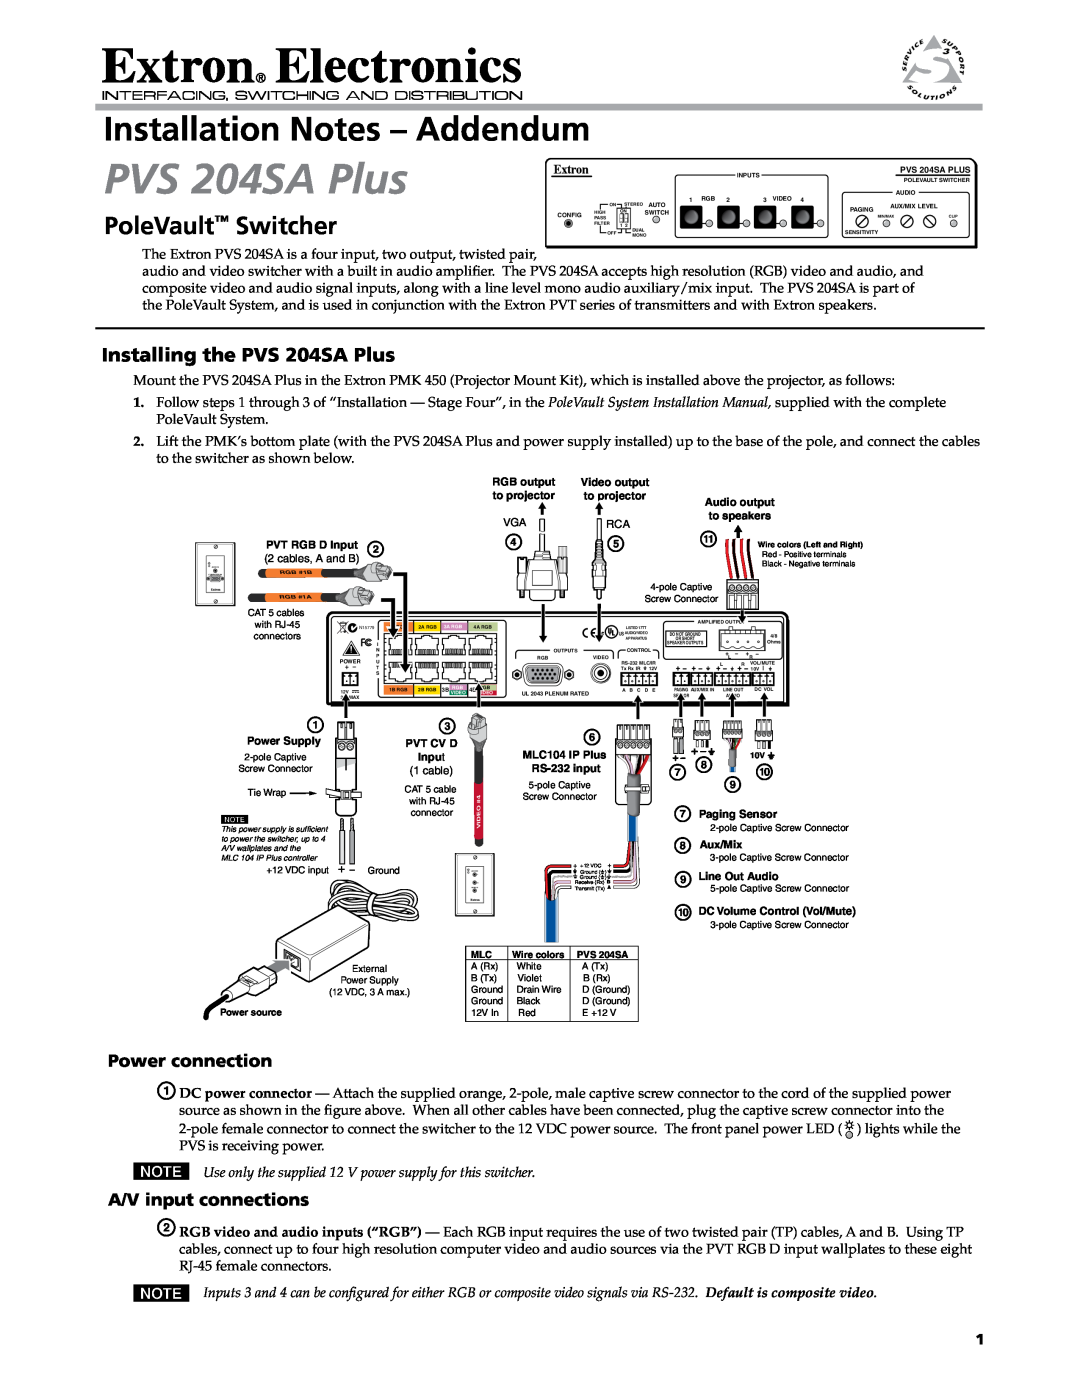 Extron electronic PVS 204SA PLUS installation manual Installing the PVS 204SA Plus, Power connection, PoleVault Switcher 